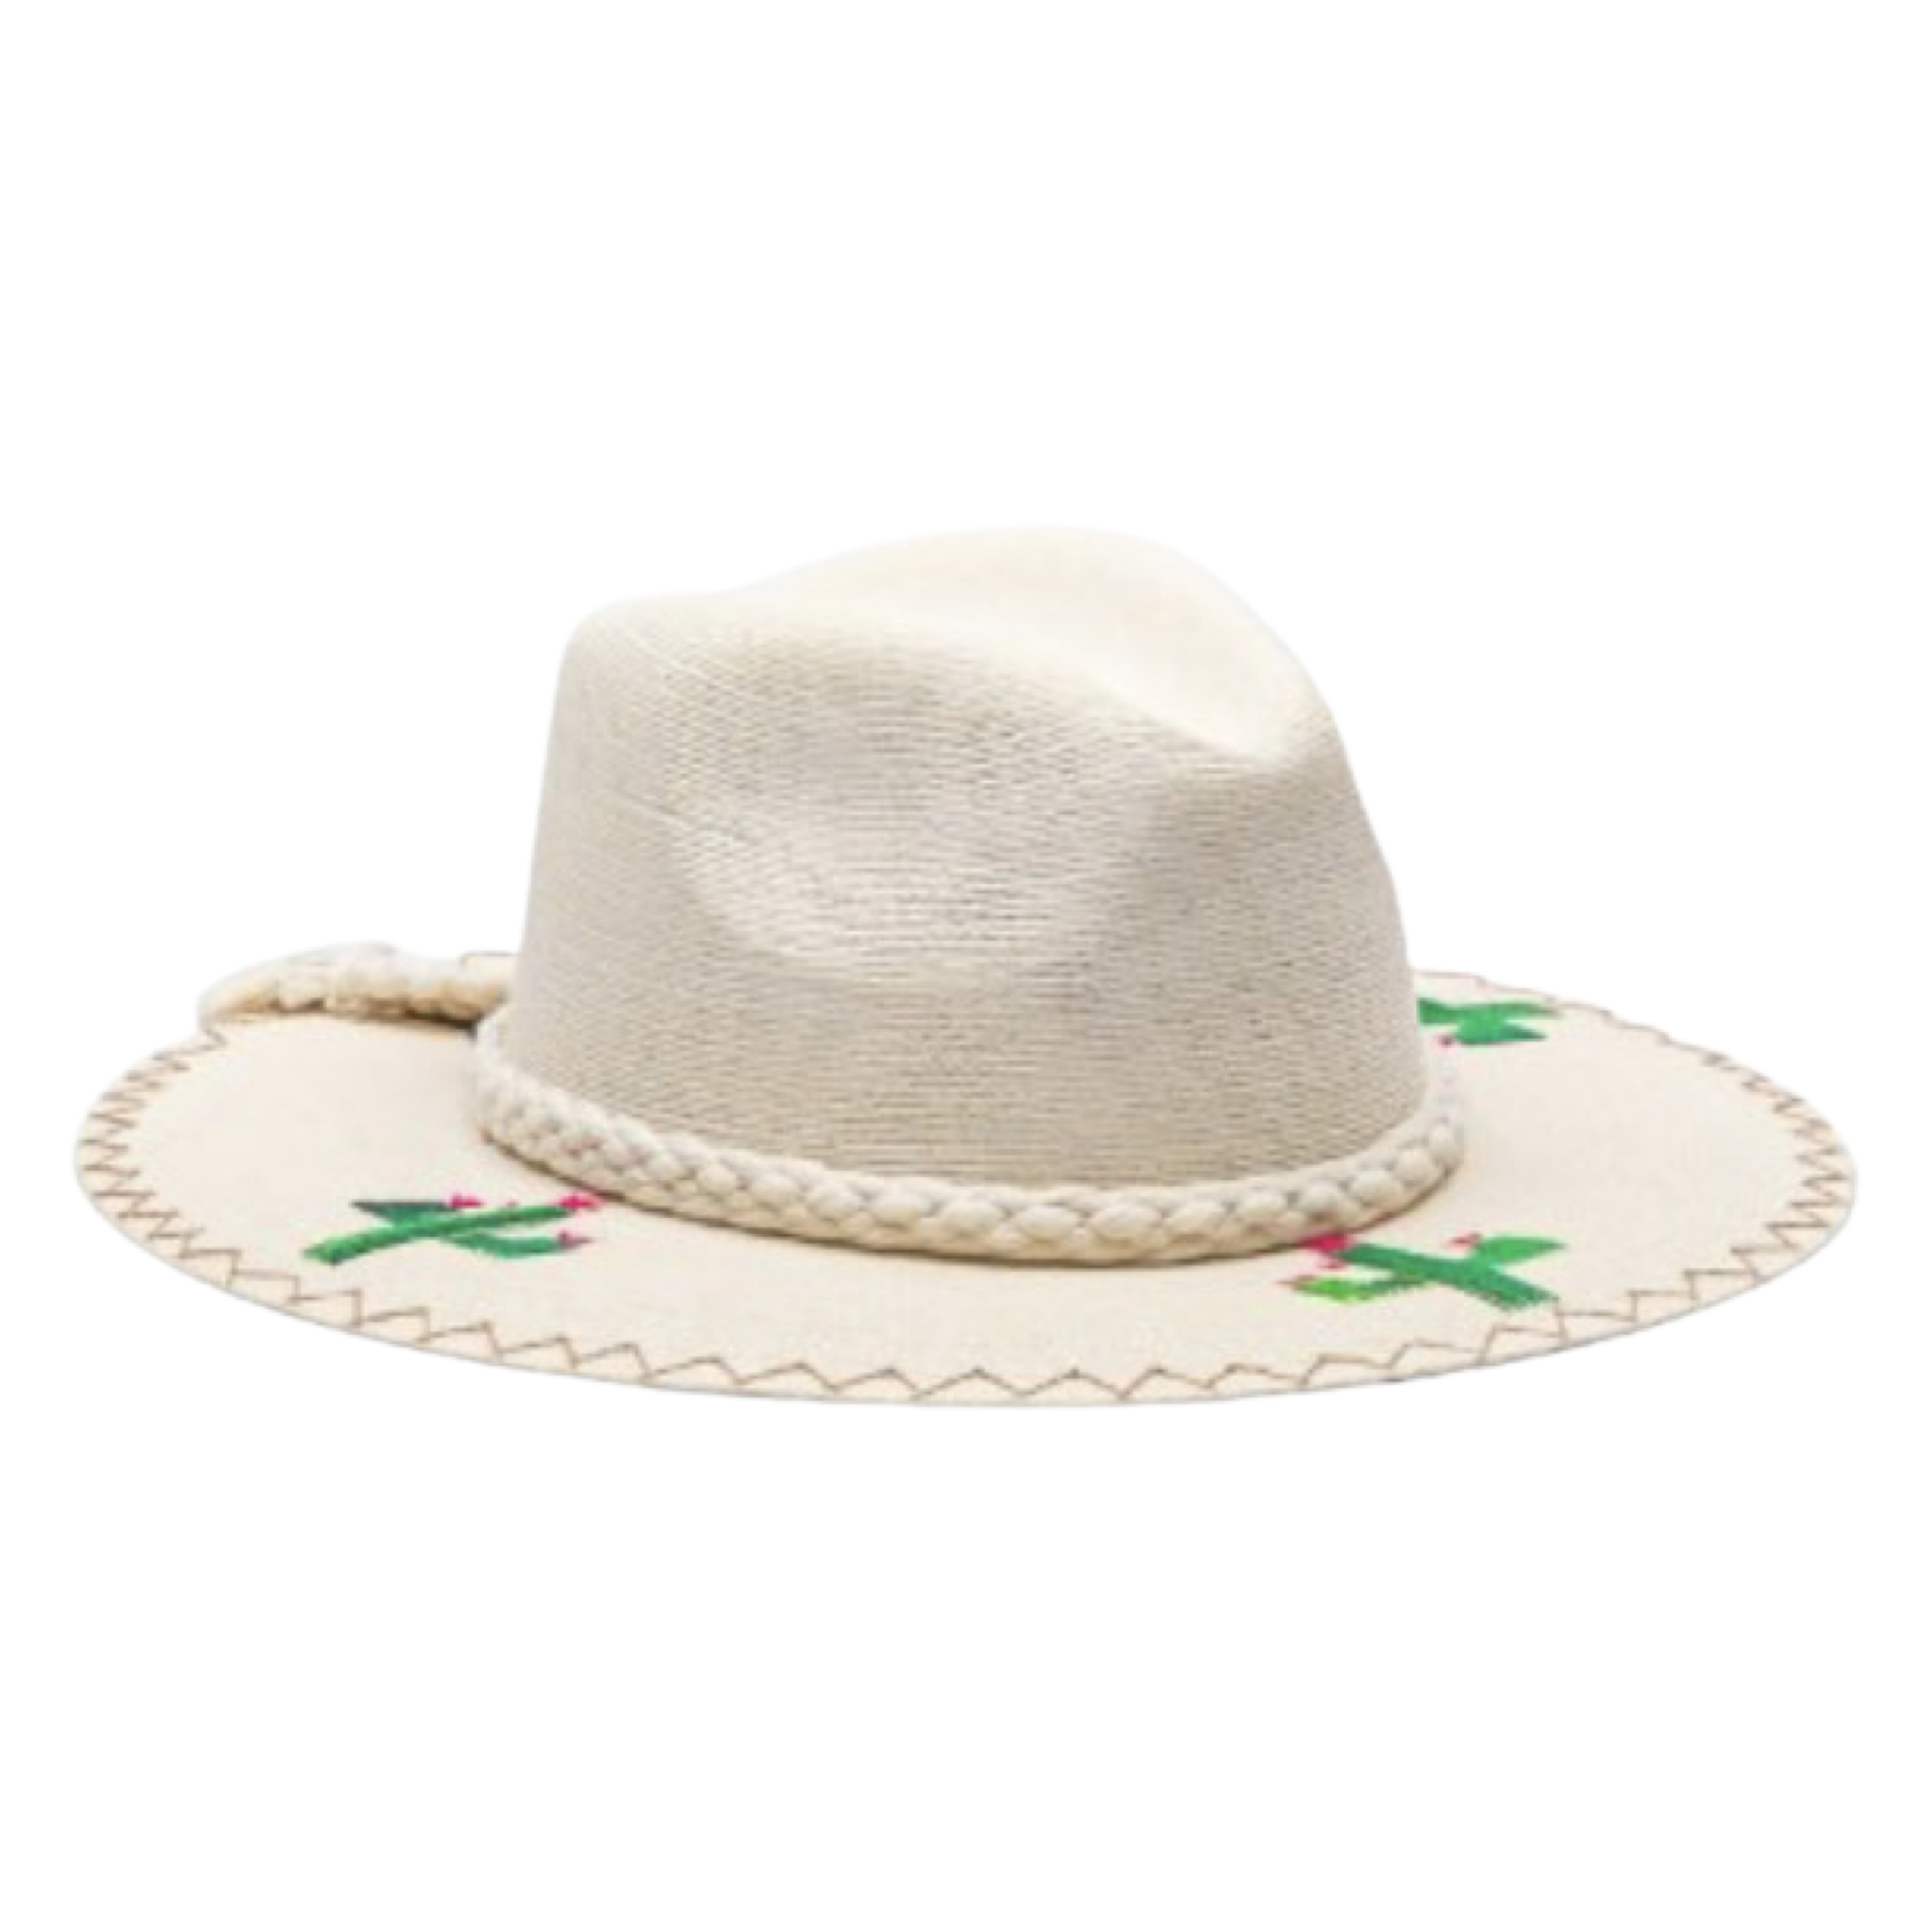 Exclusive Cactus Hat by Corazon Playero